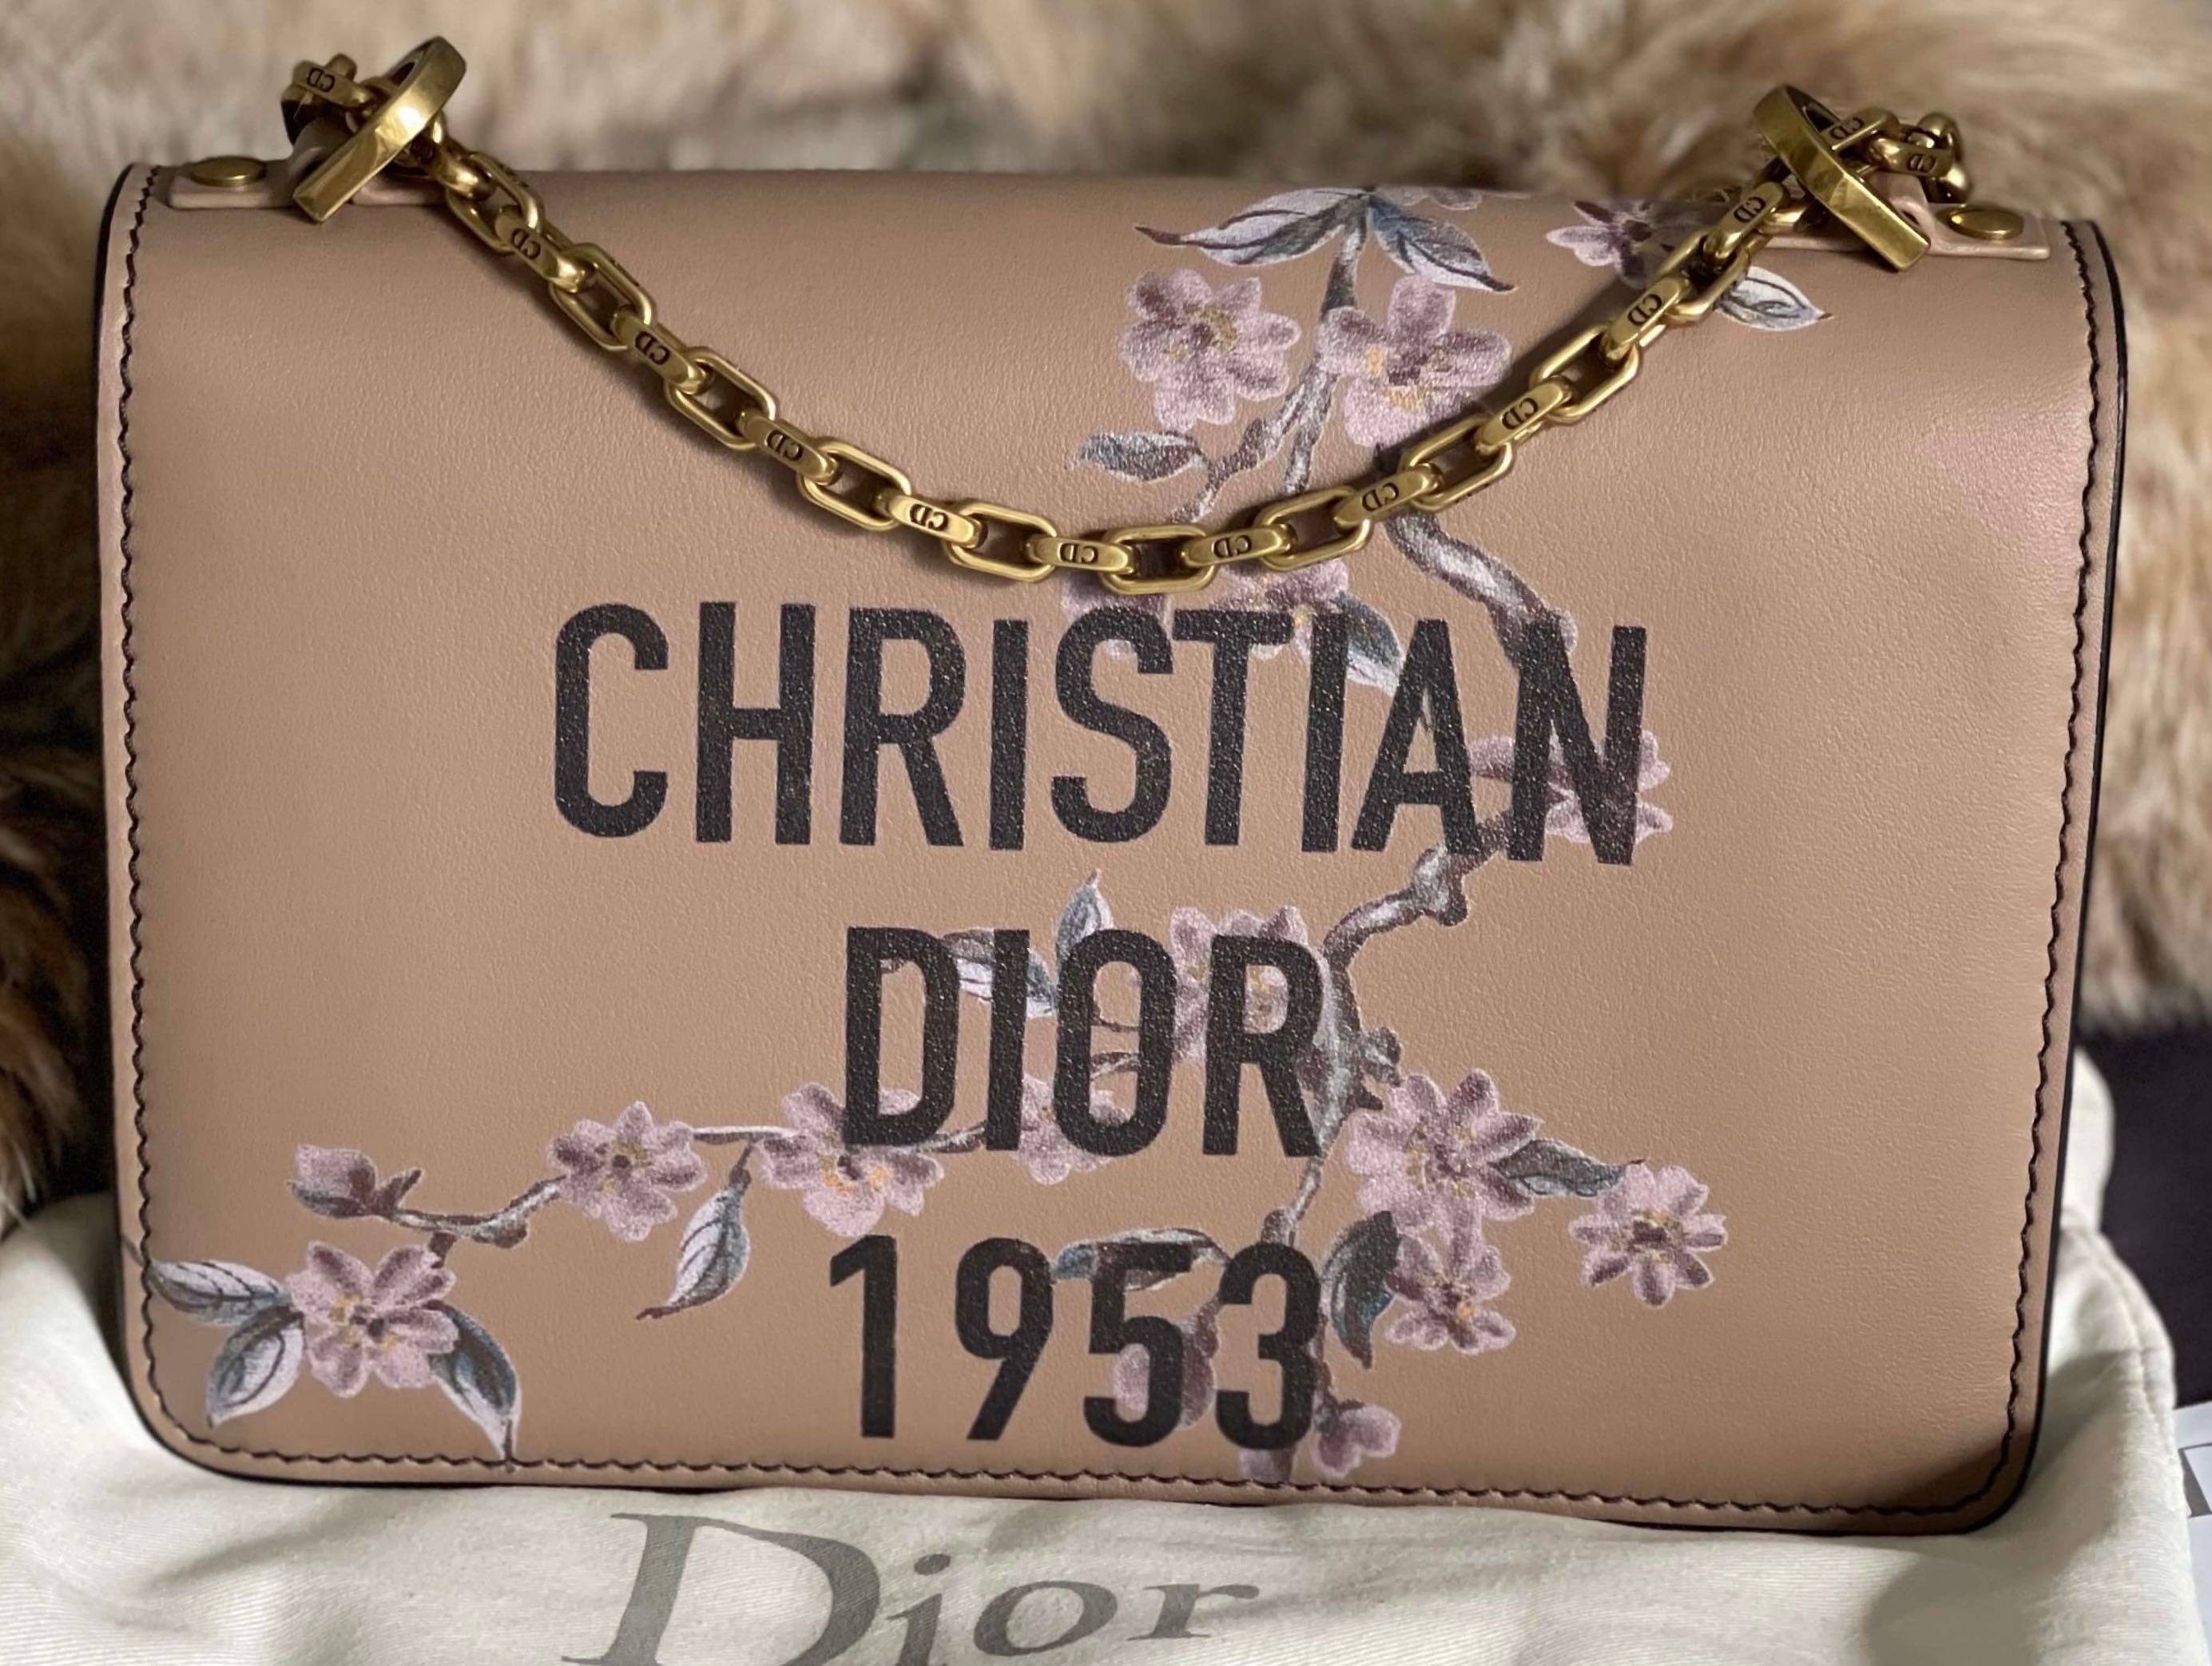 J’ADIOR Christian Dior сумка